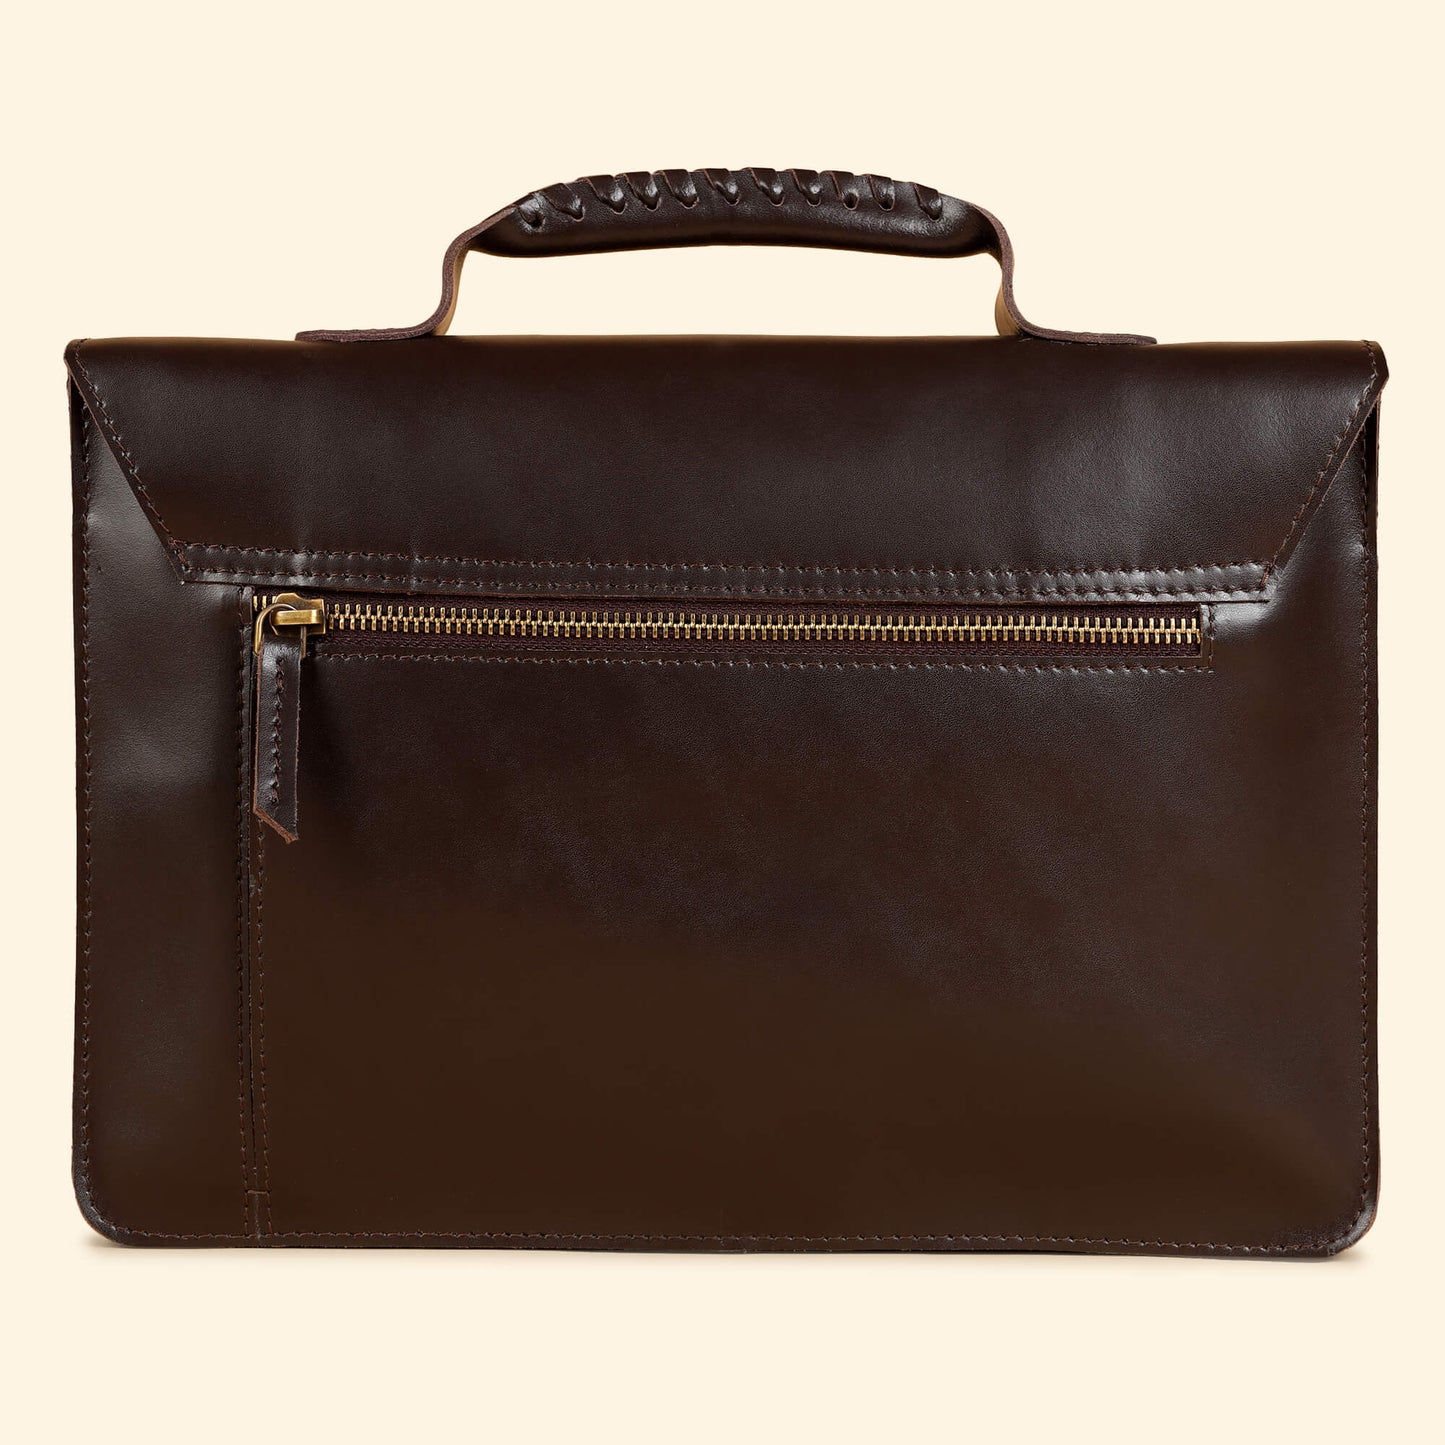 Olgor Utility bag- Genuine Leather Brown